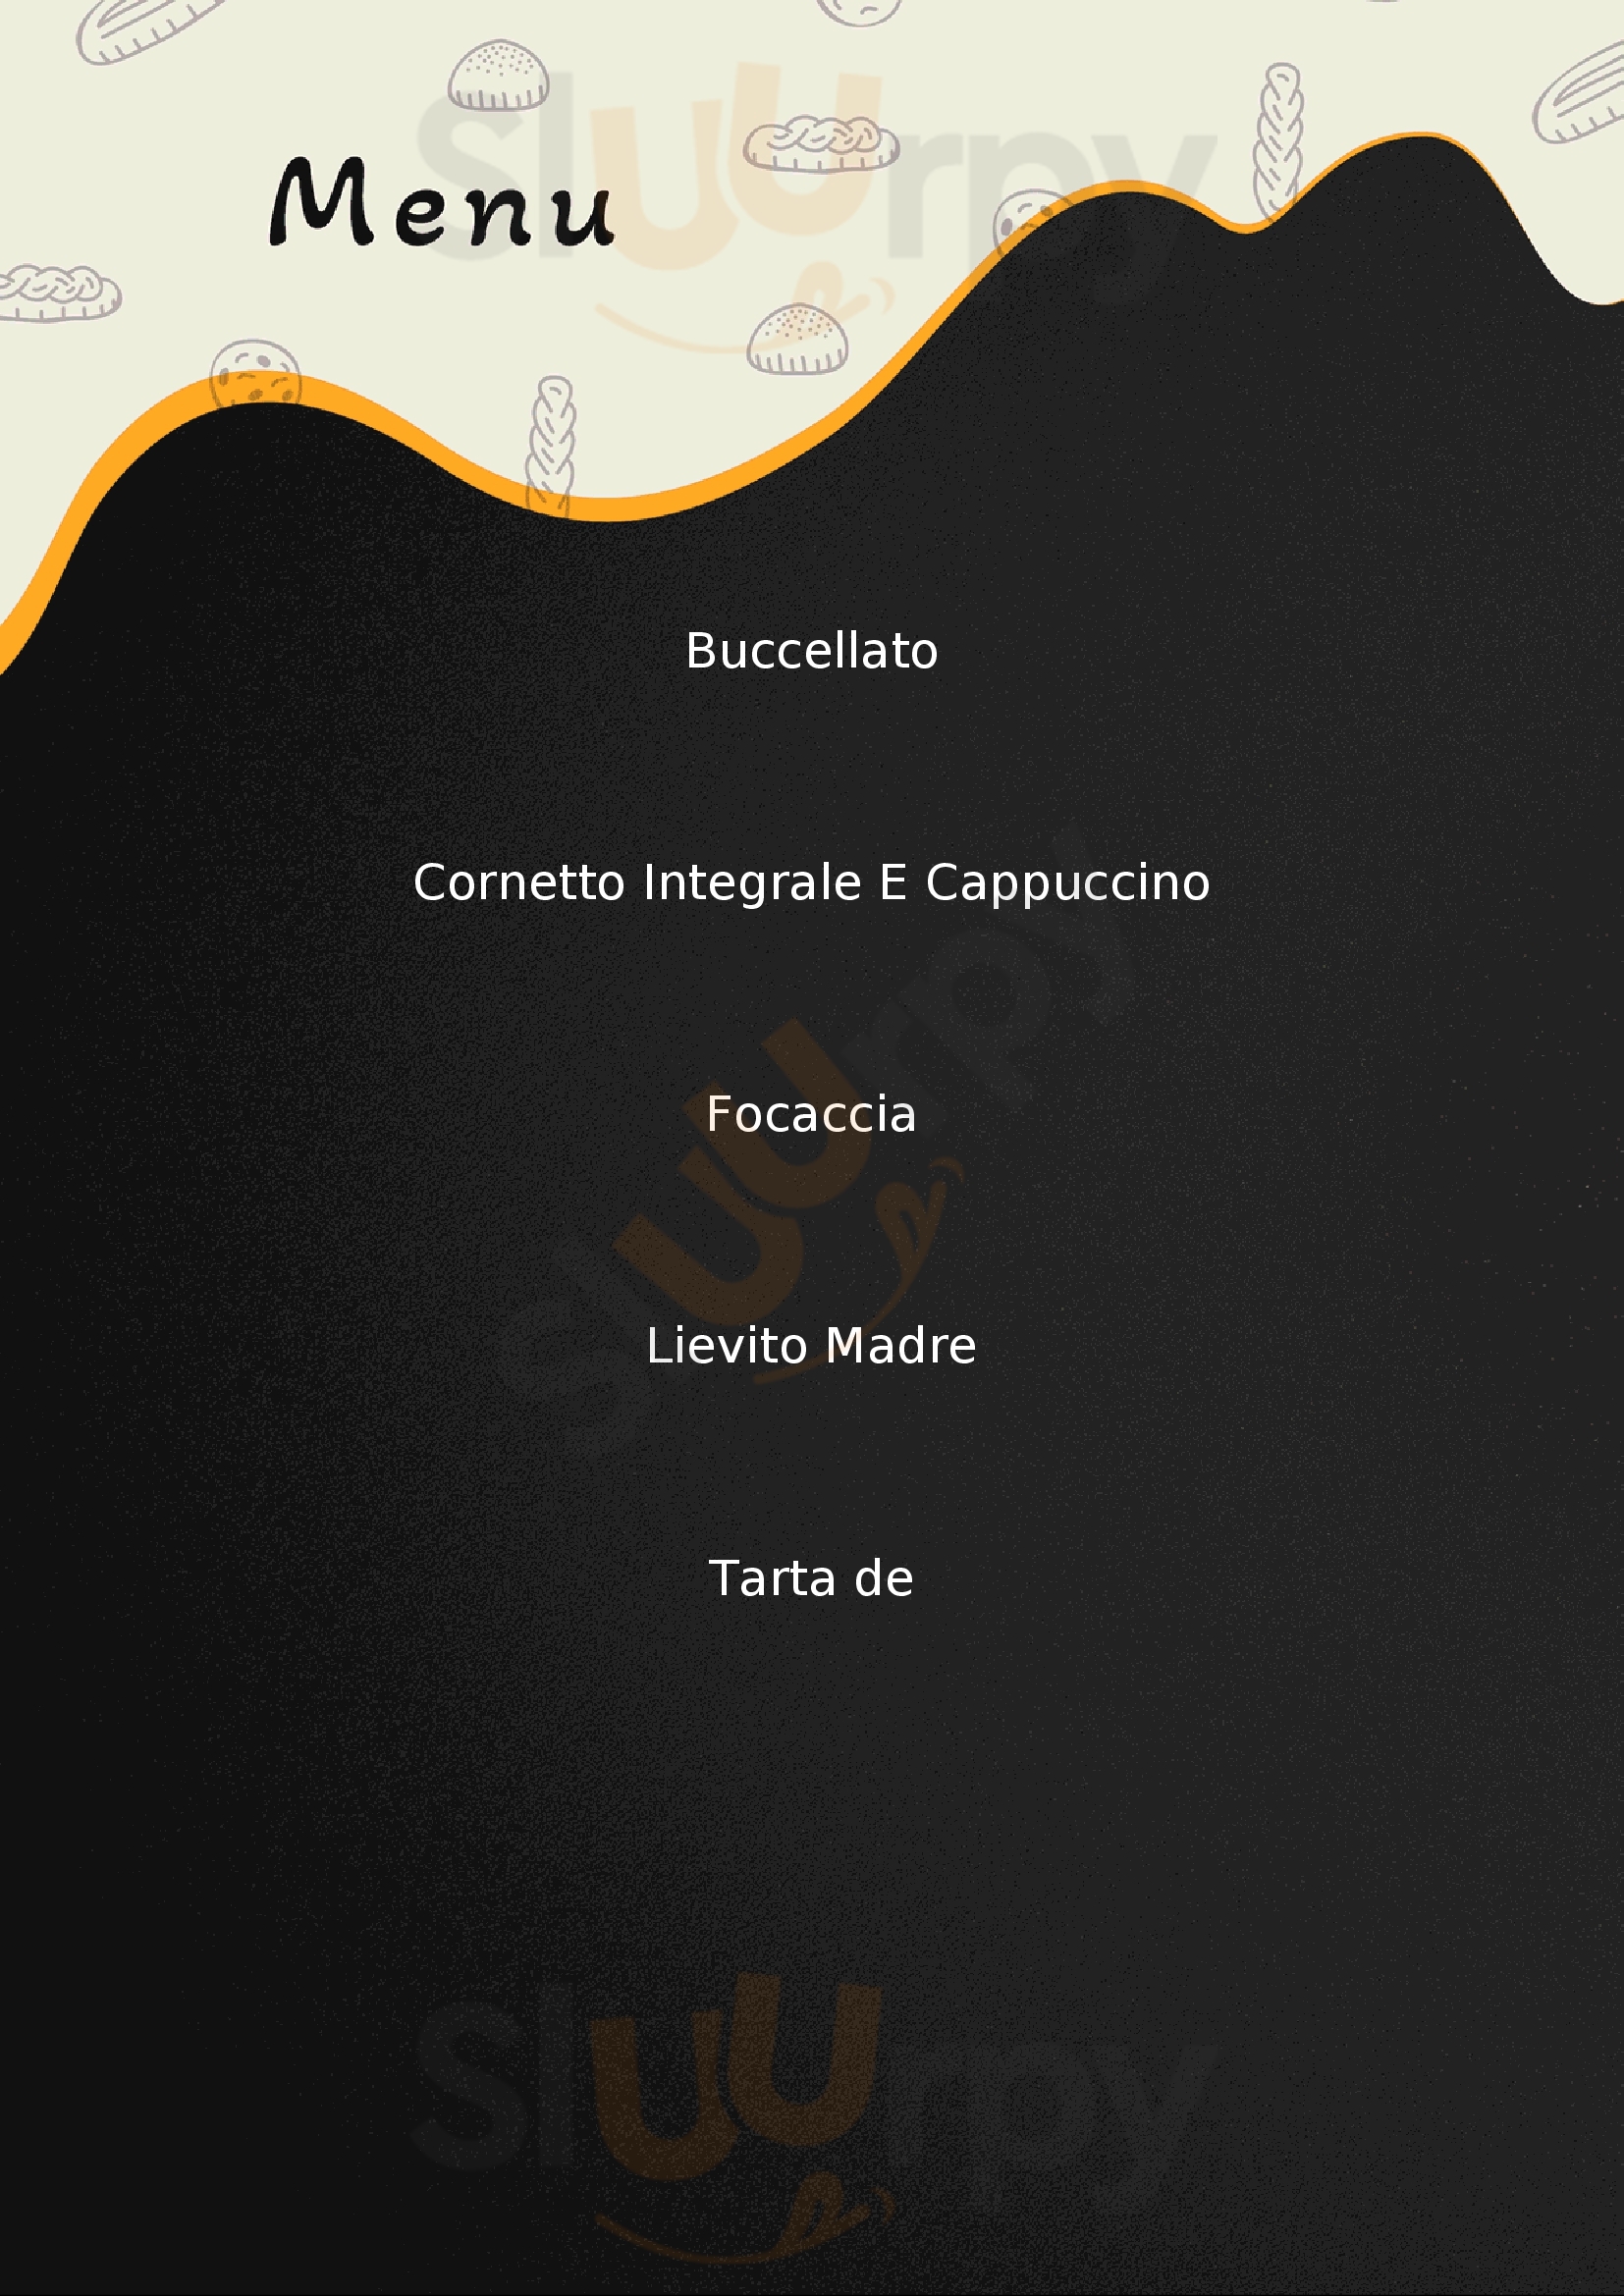 Panificio Artigianale Lucca menù 1 pagina